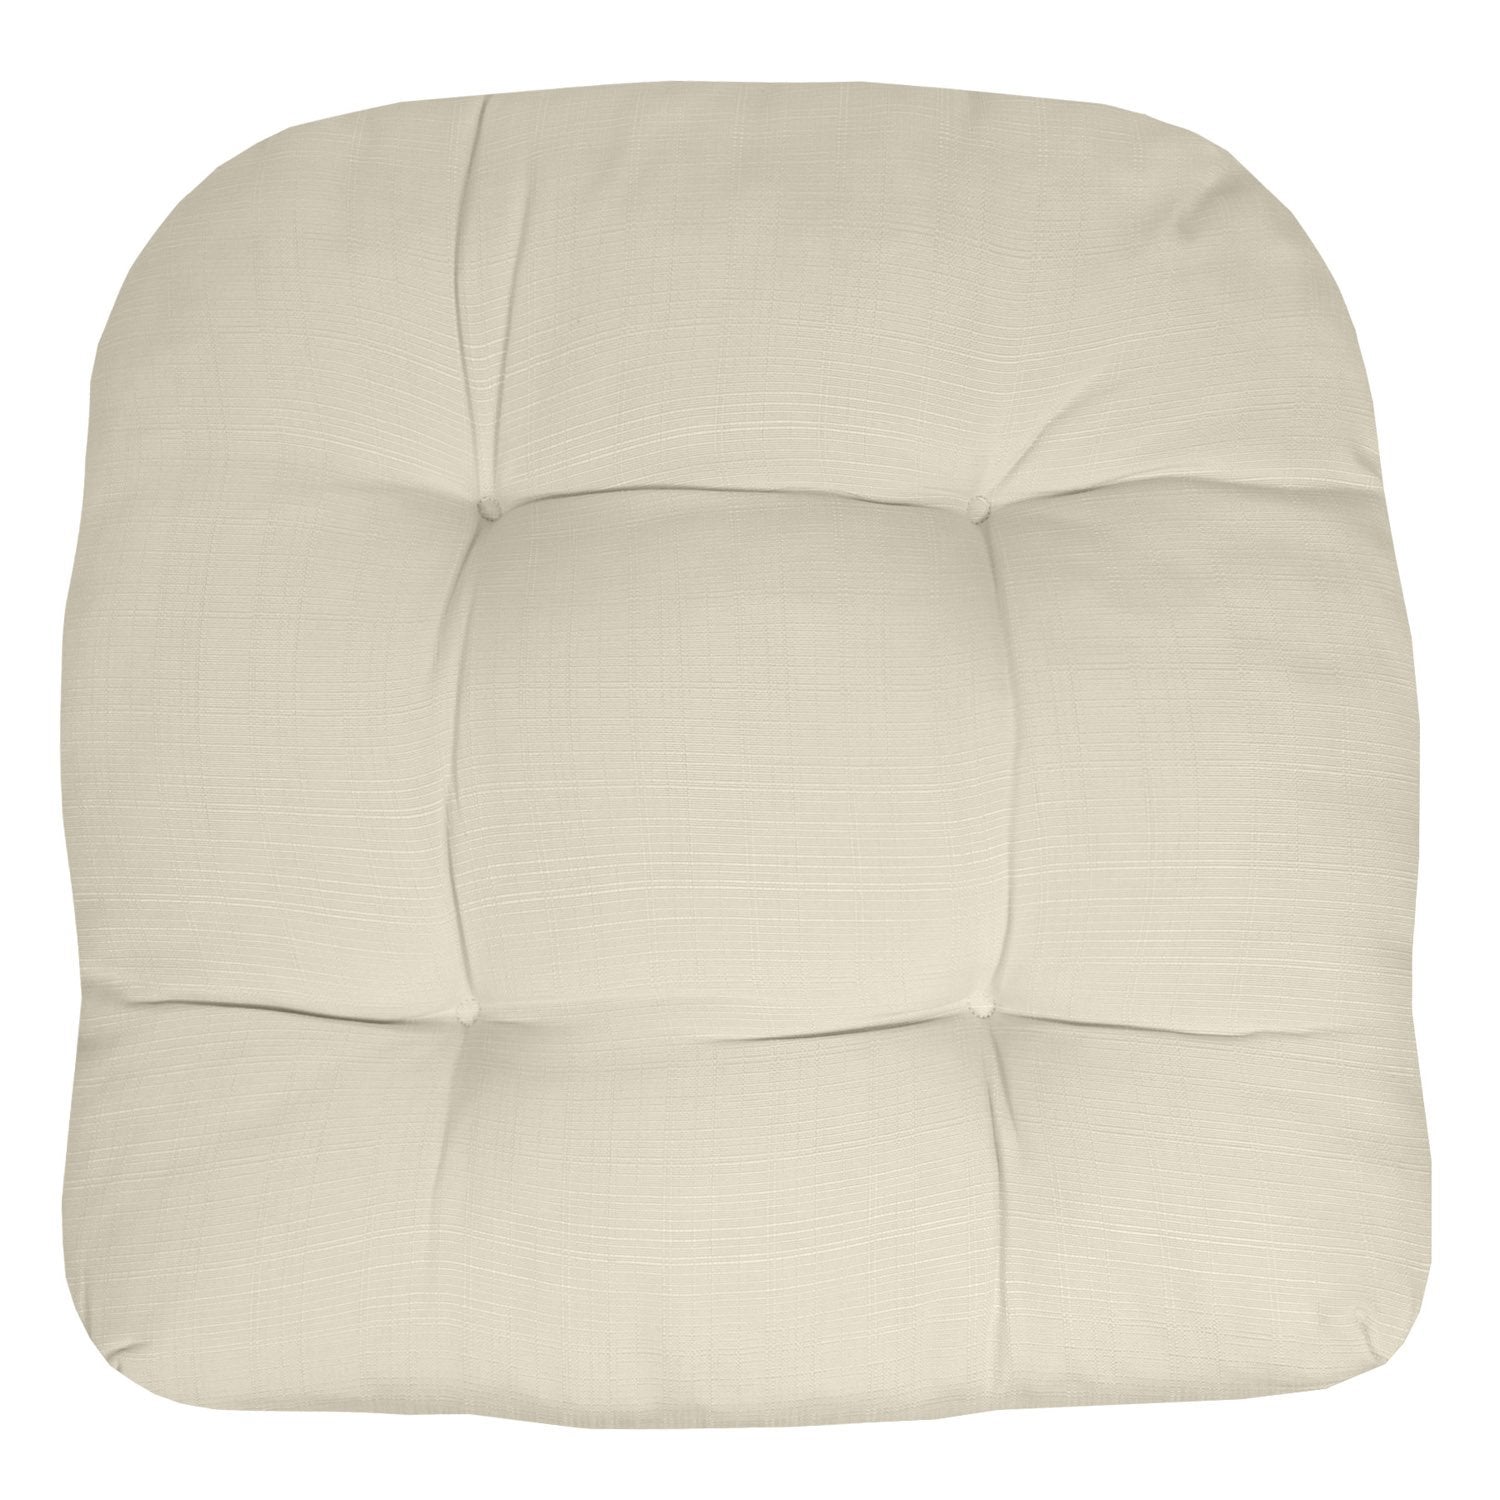 Patio Seat Cushion Set Cream - Top